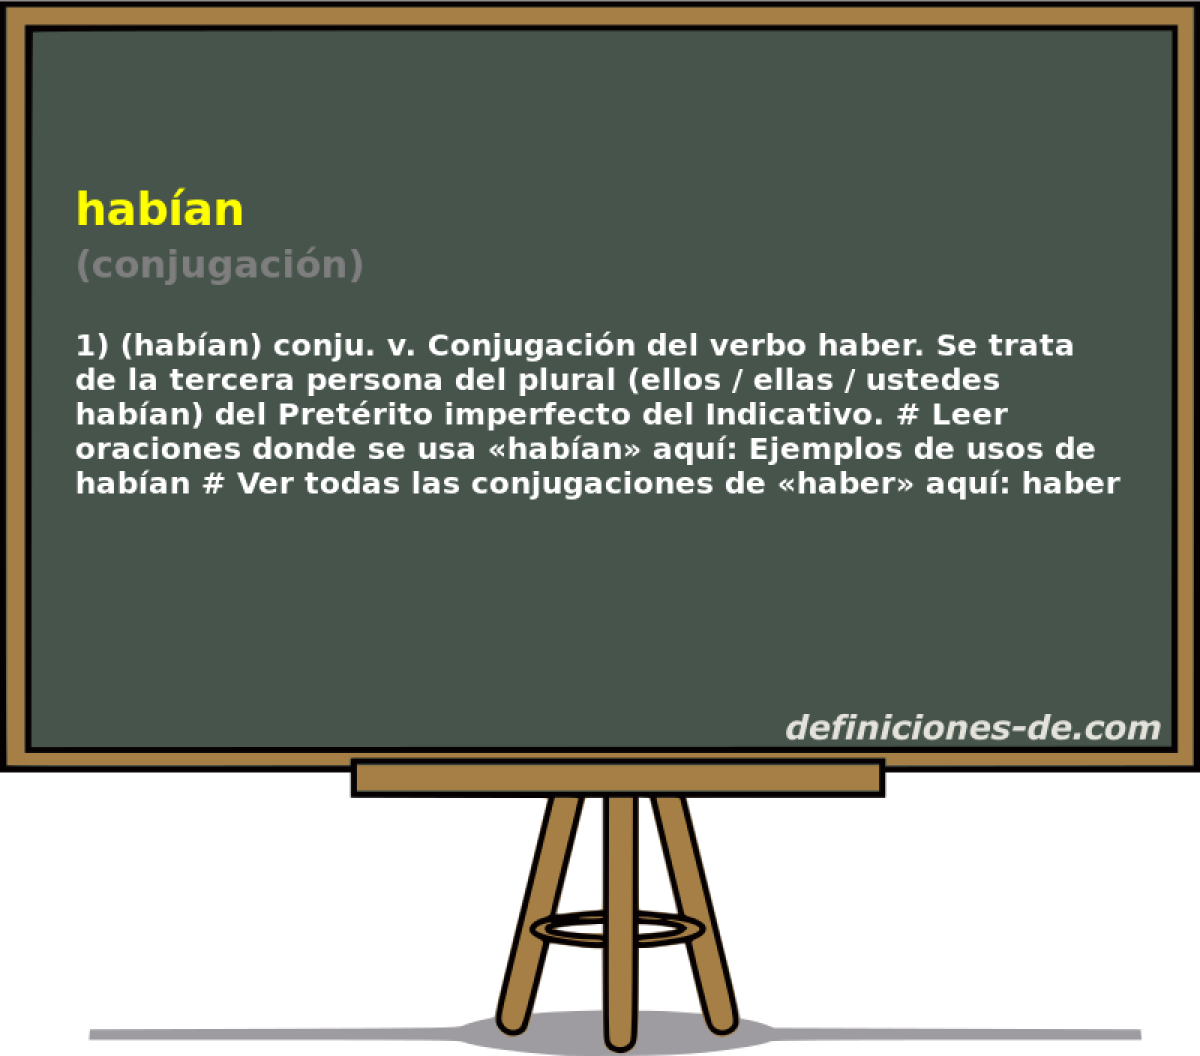 haban (conjugacin)